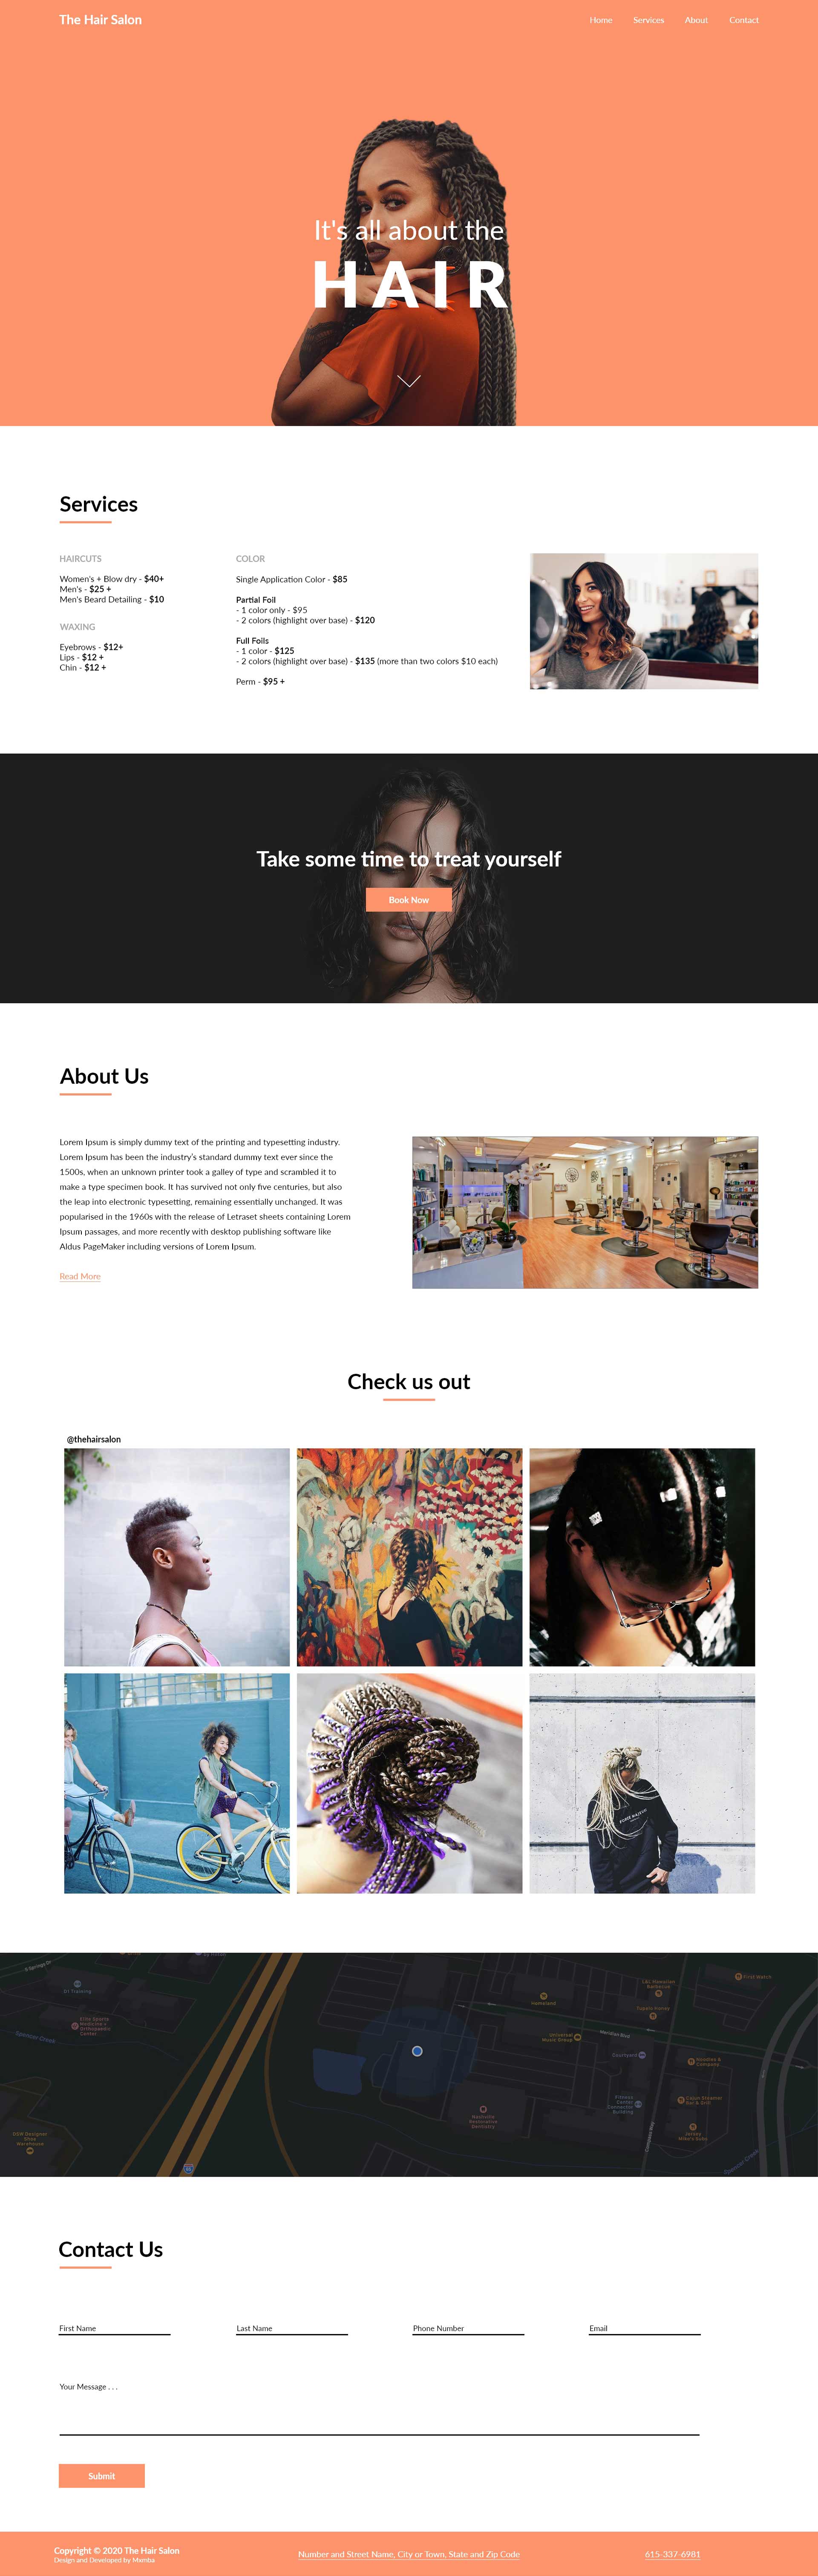 Hair Salon Website Design Concept